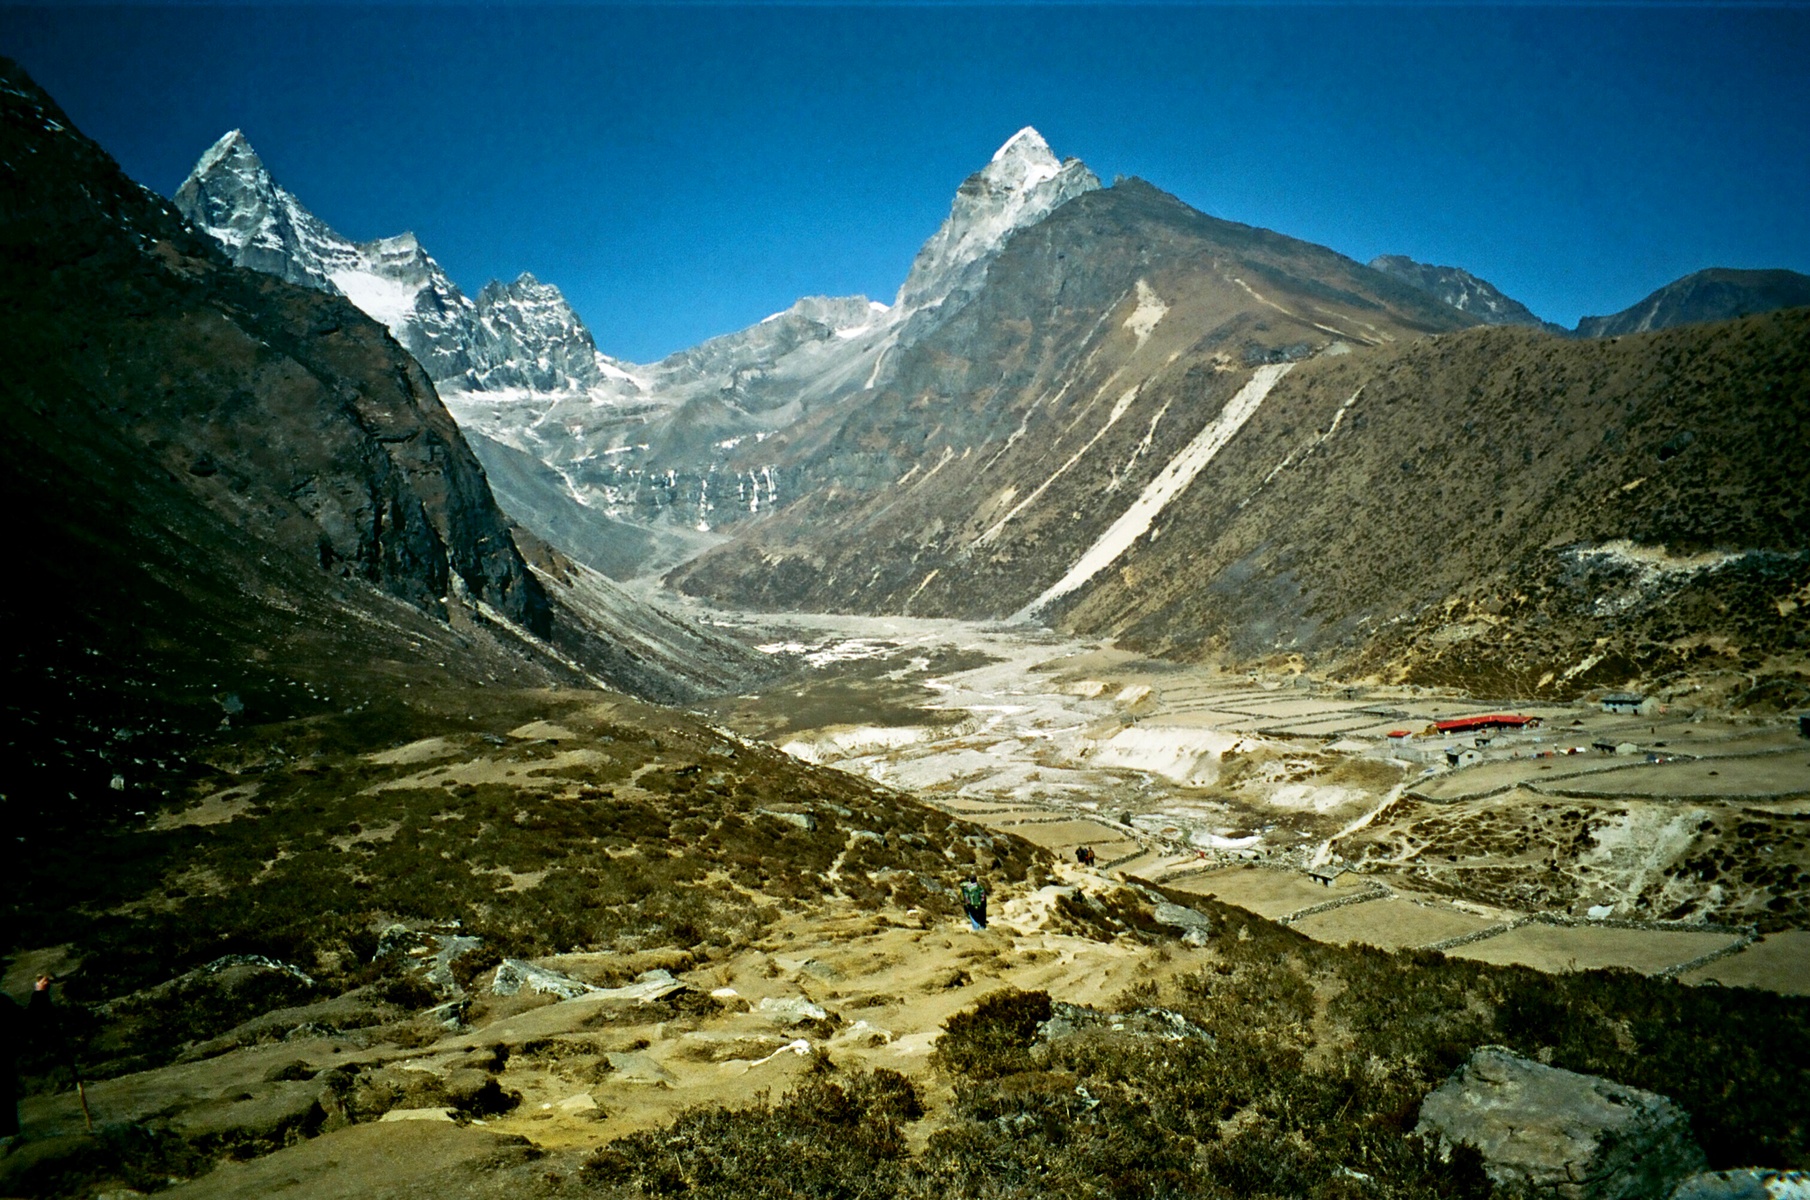 Khumbu region, Nepal